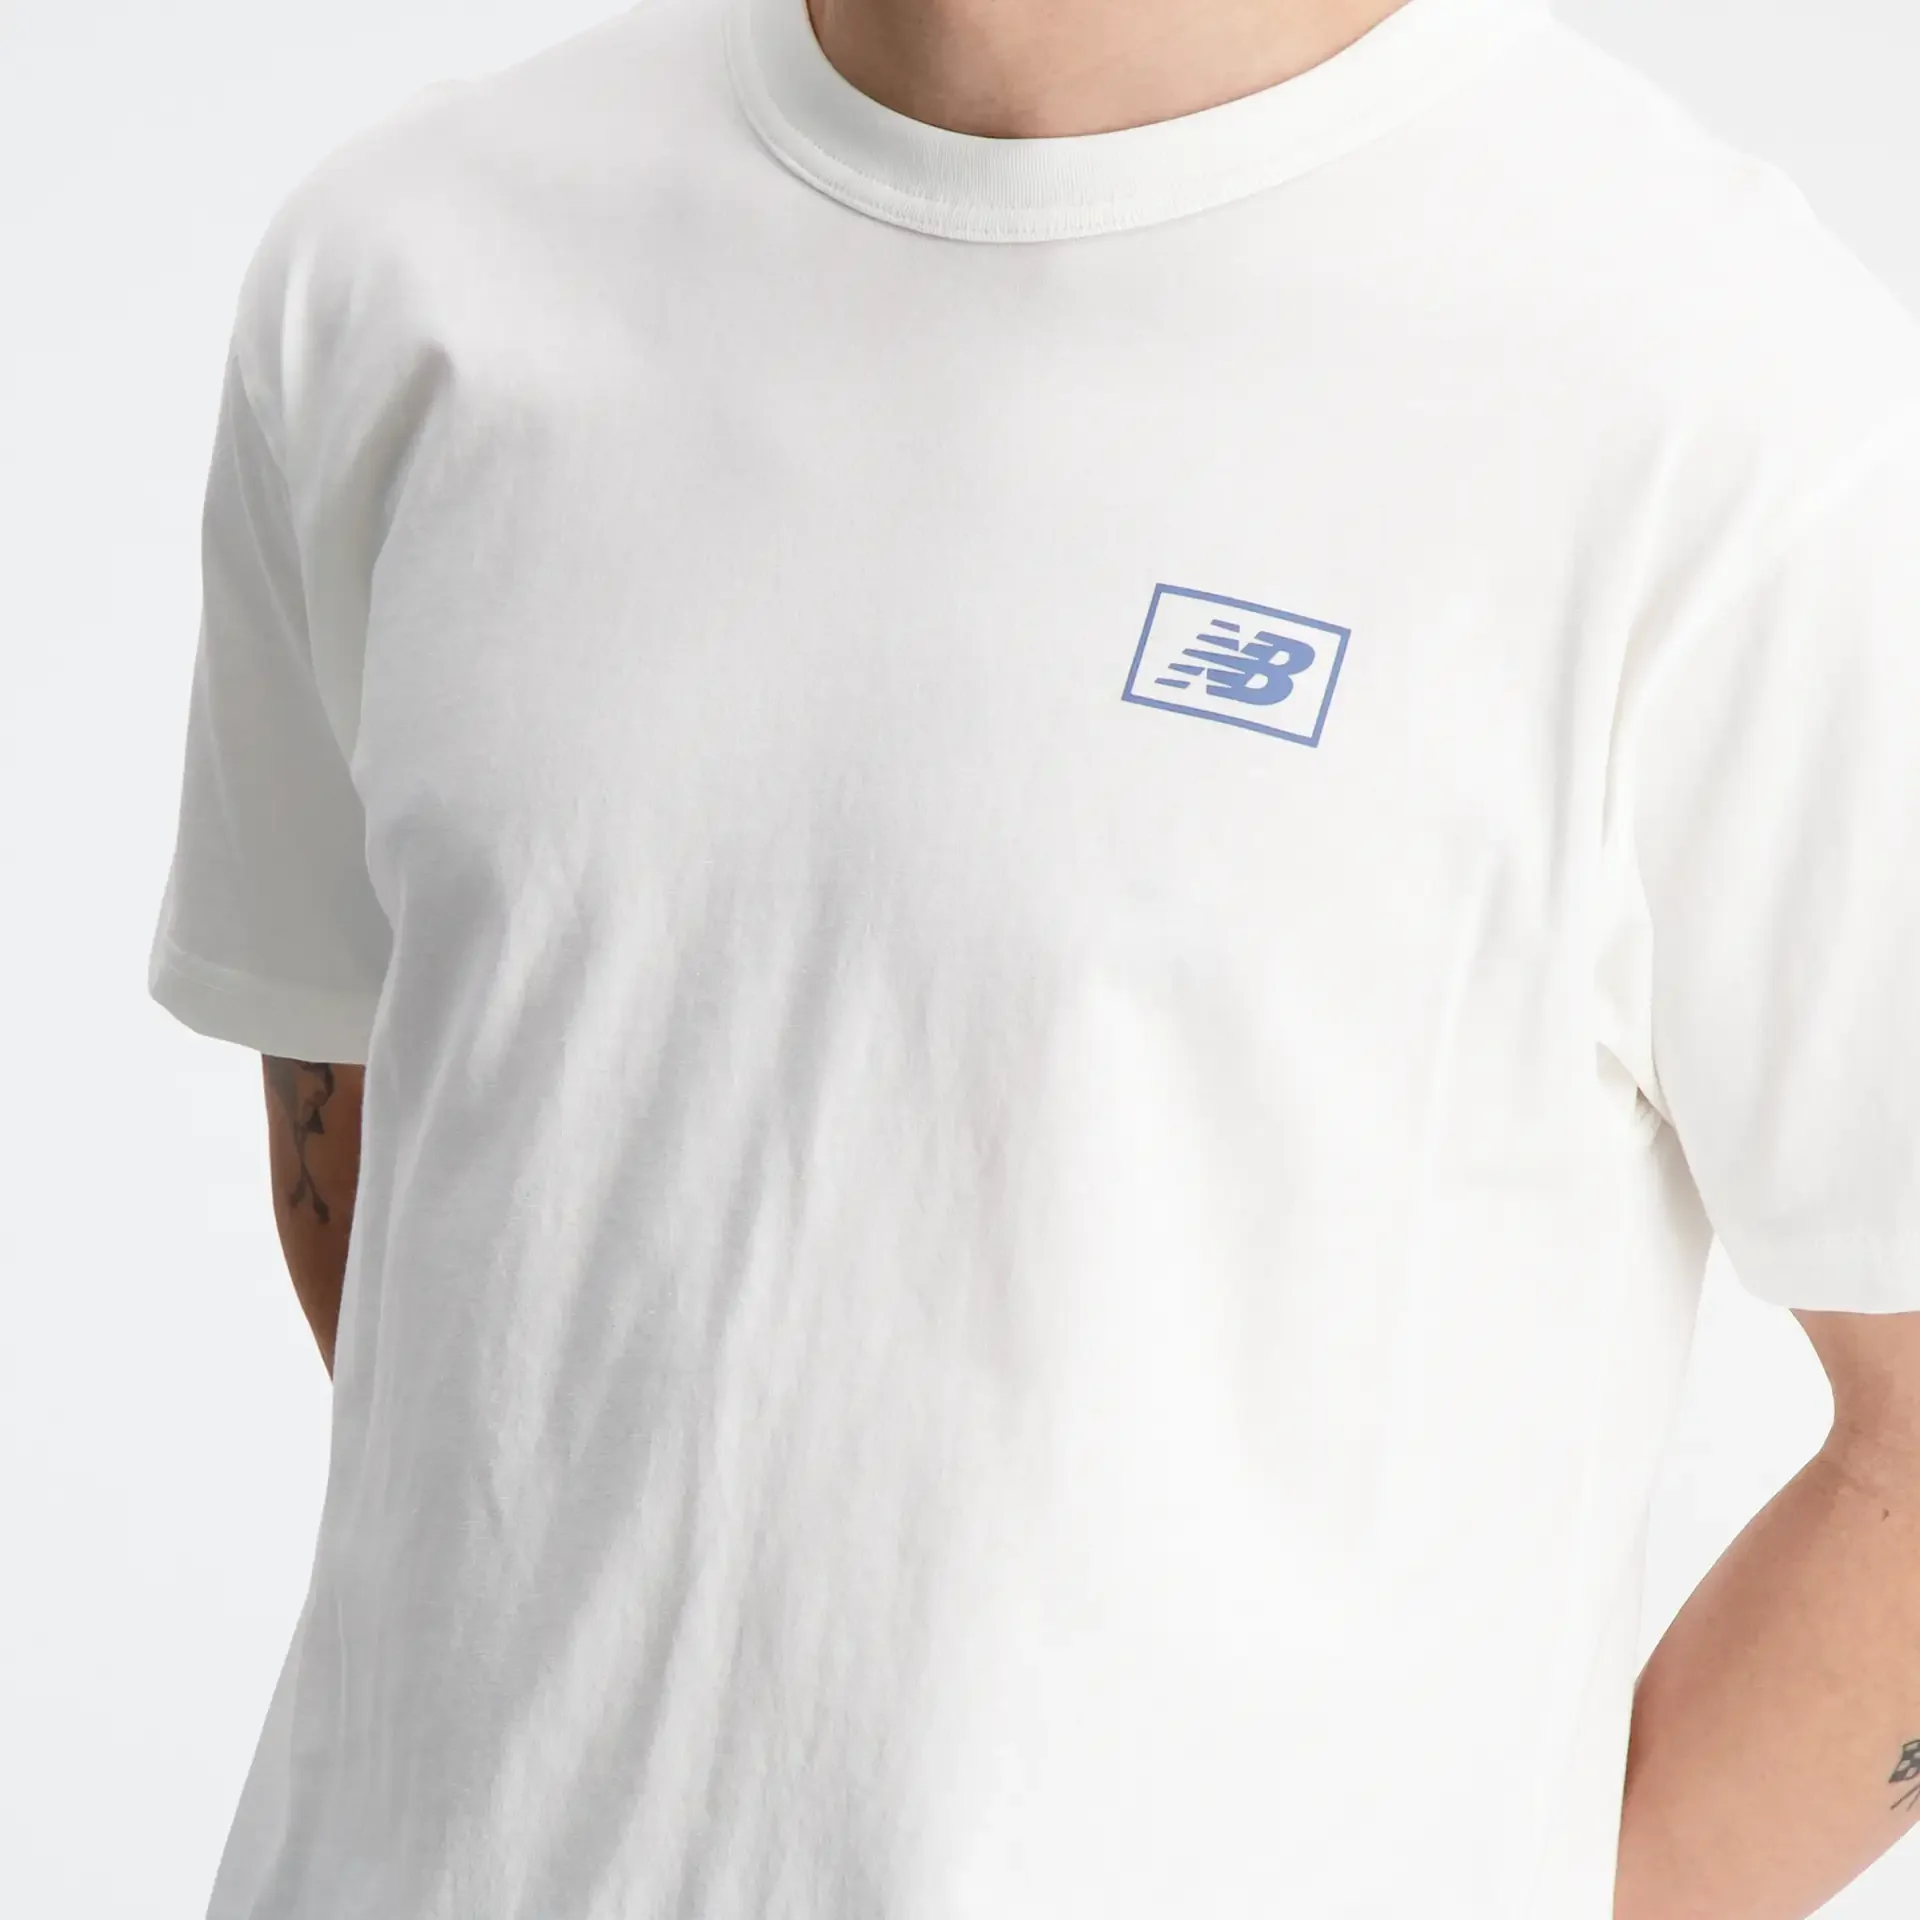 New Balance Essentials Graphic T-Shirt Sea Salt